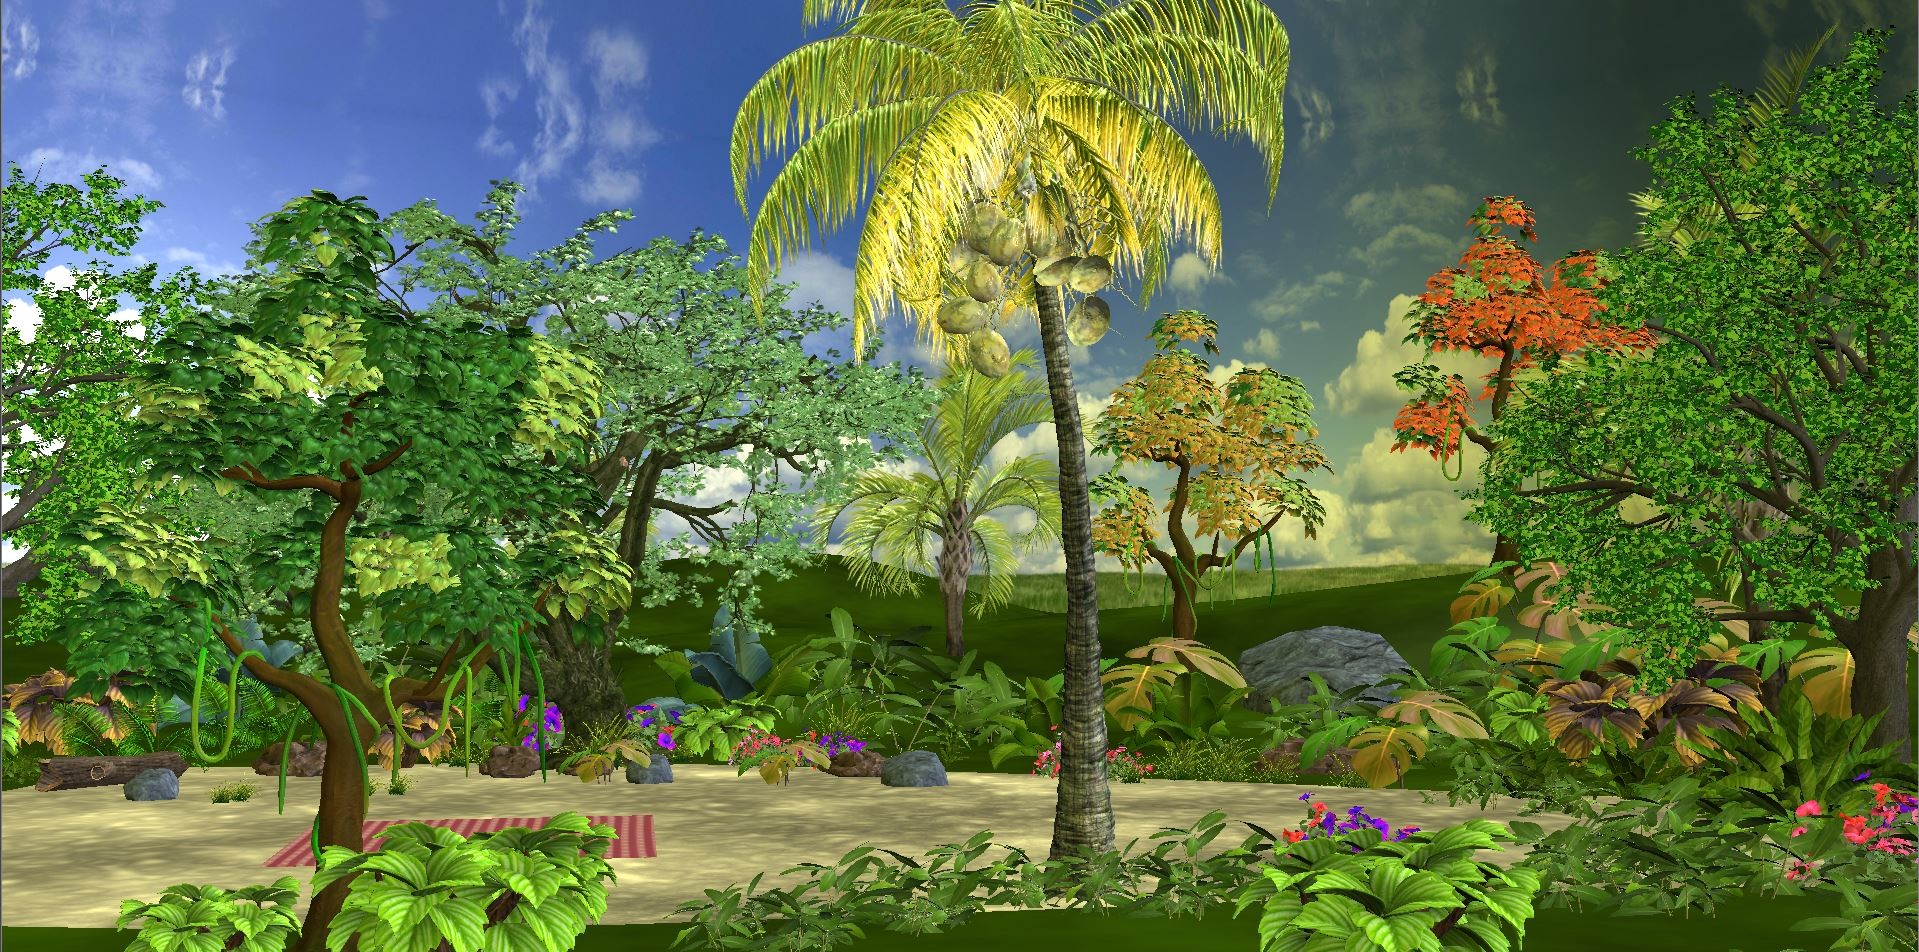  - 3D Jungle Background